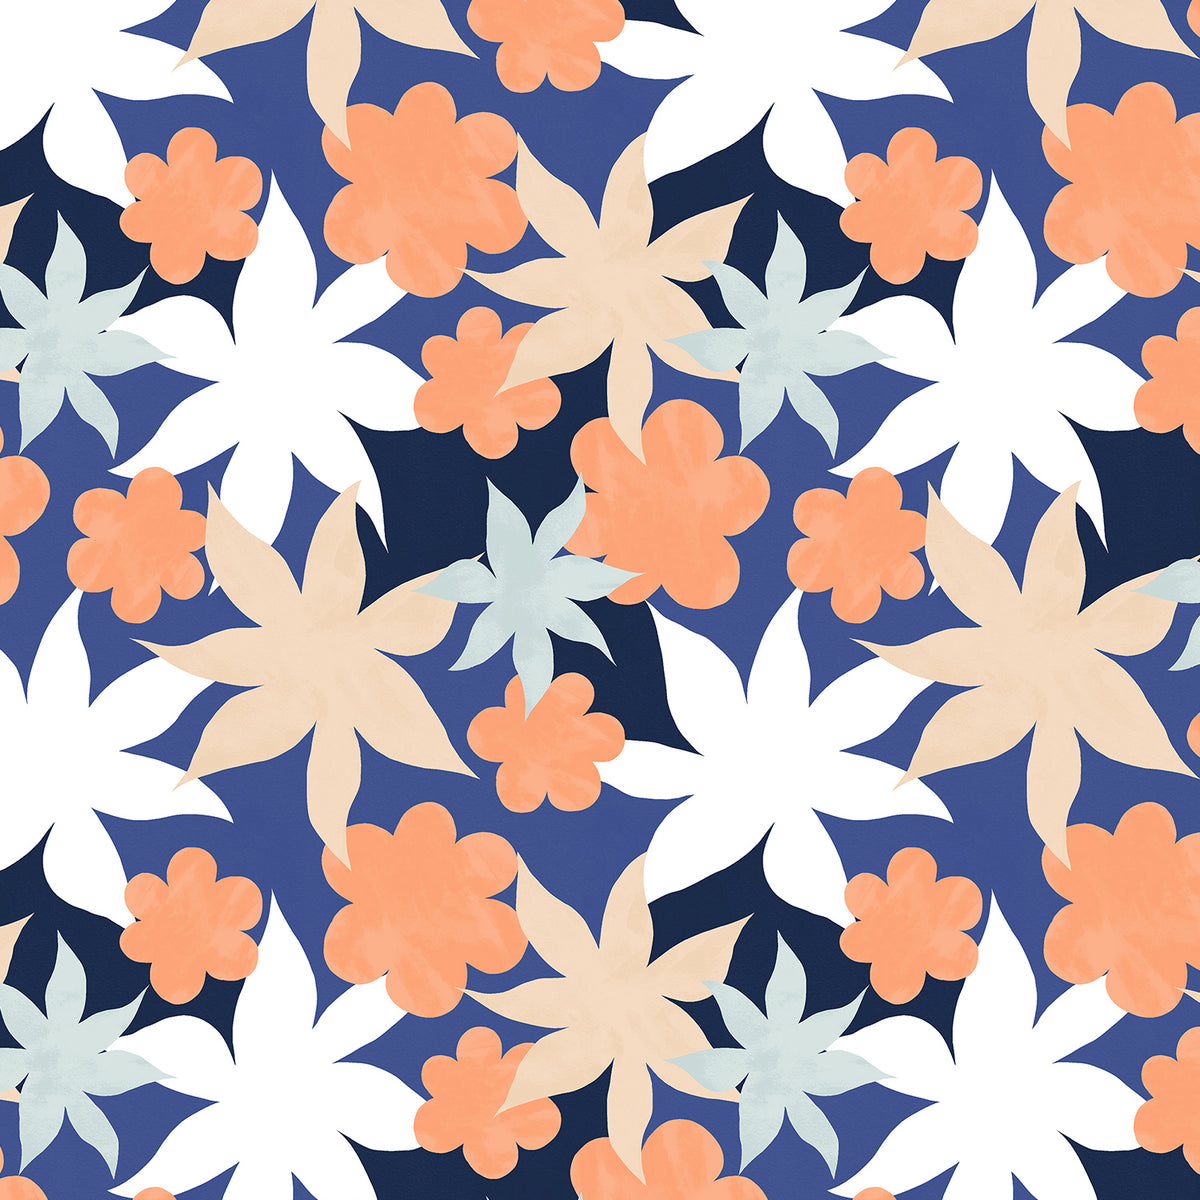 Wide Open Spaces Quilt Fabric - Wildflowers in Sea Urchin Blue/Orange - RJ3401-SU3